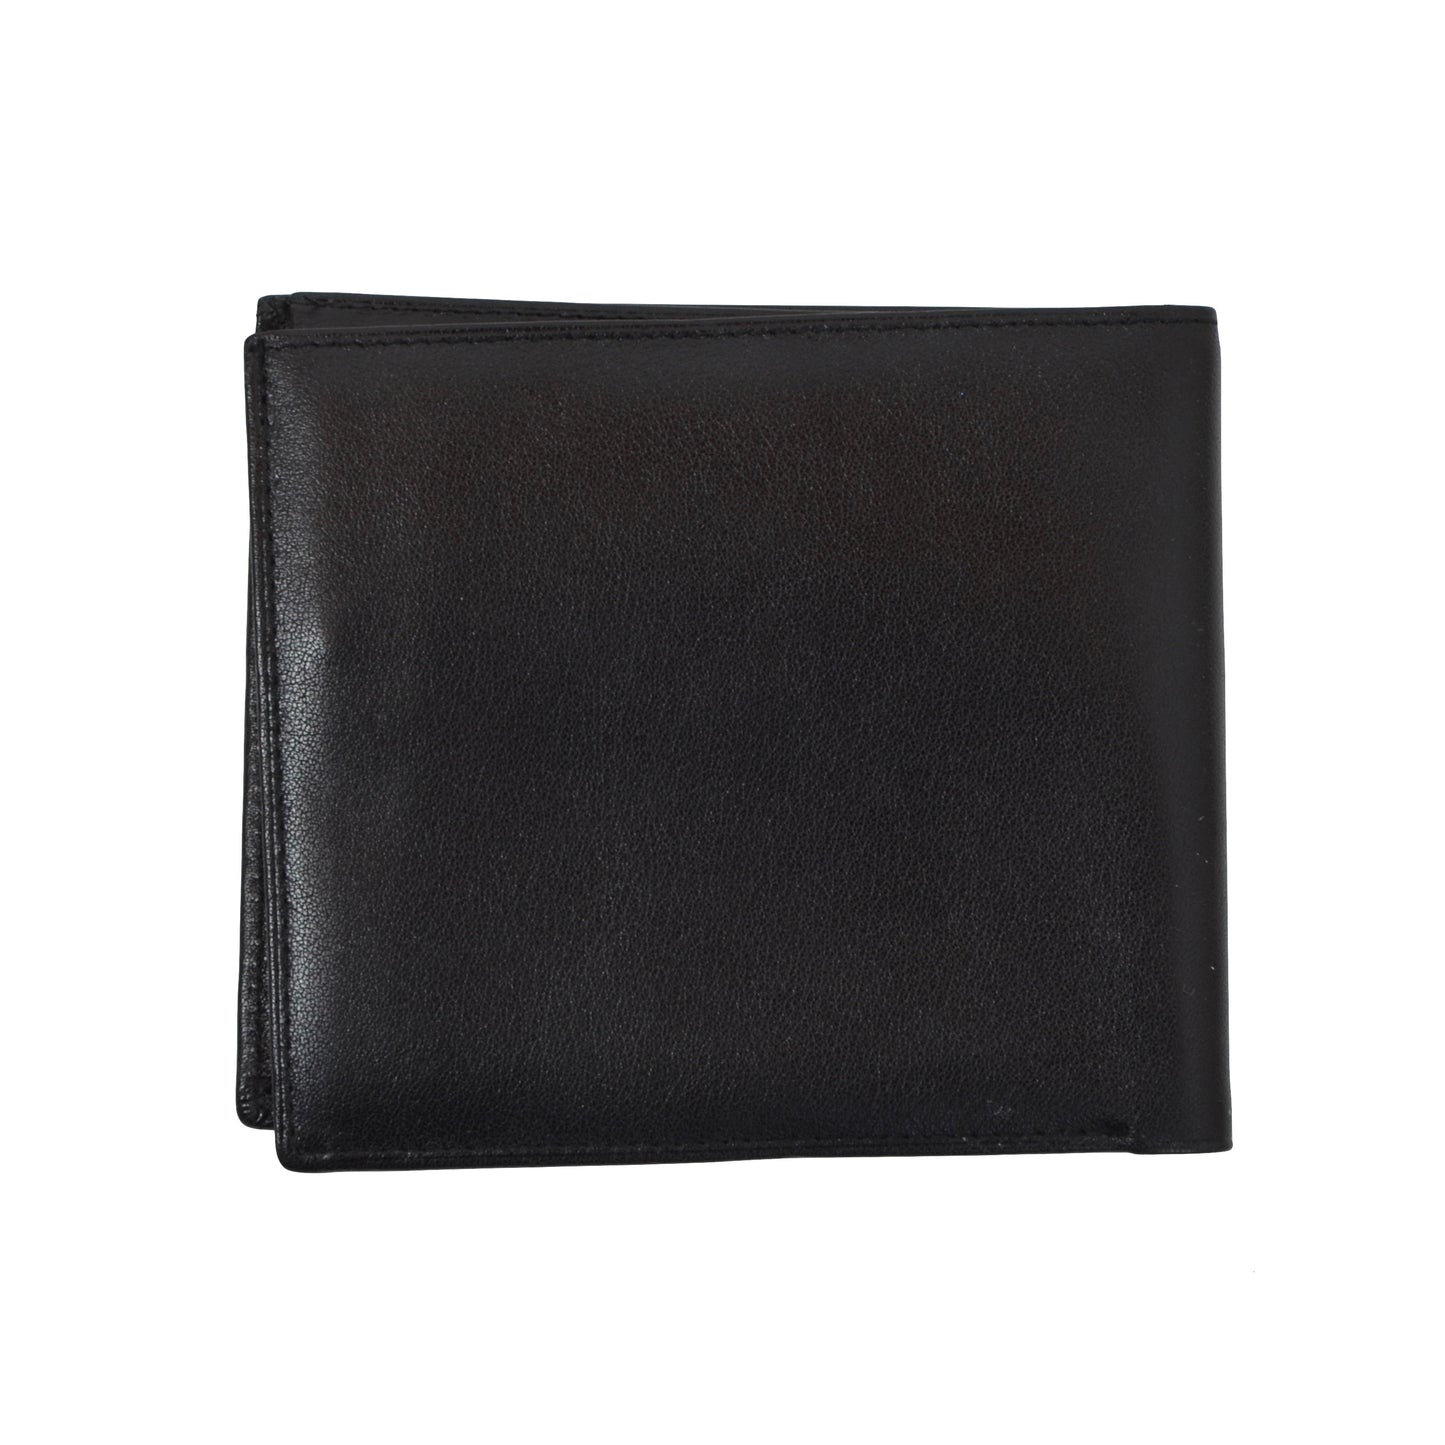 Becker Handmade Leather Billfold/Wallet - Black